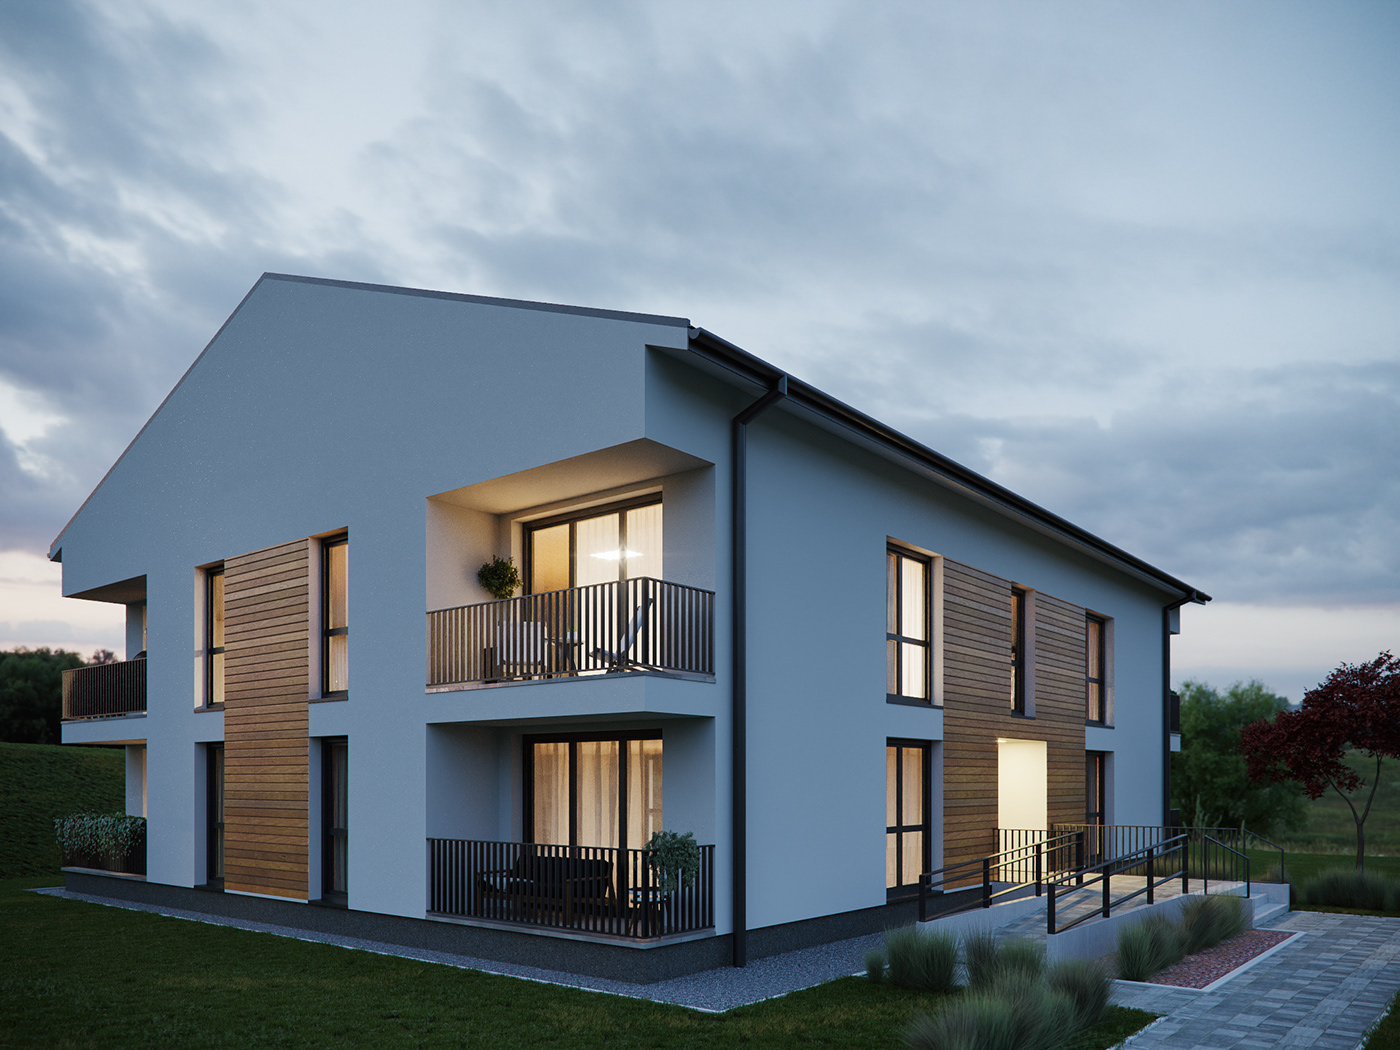 living room 3ds max archviz CGI exterior visualization Render architecture 3D modern